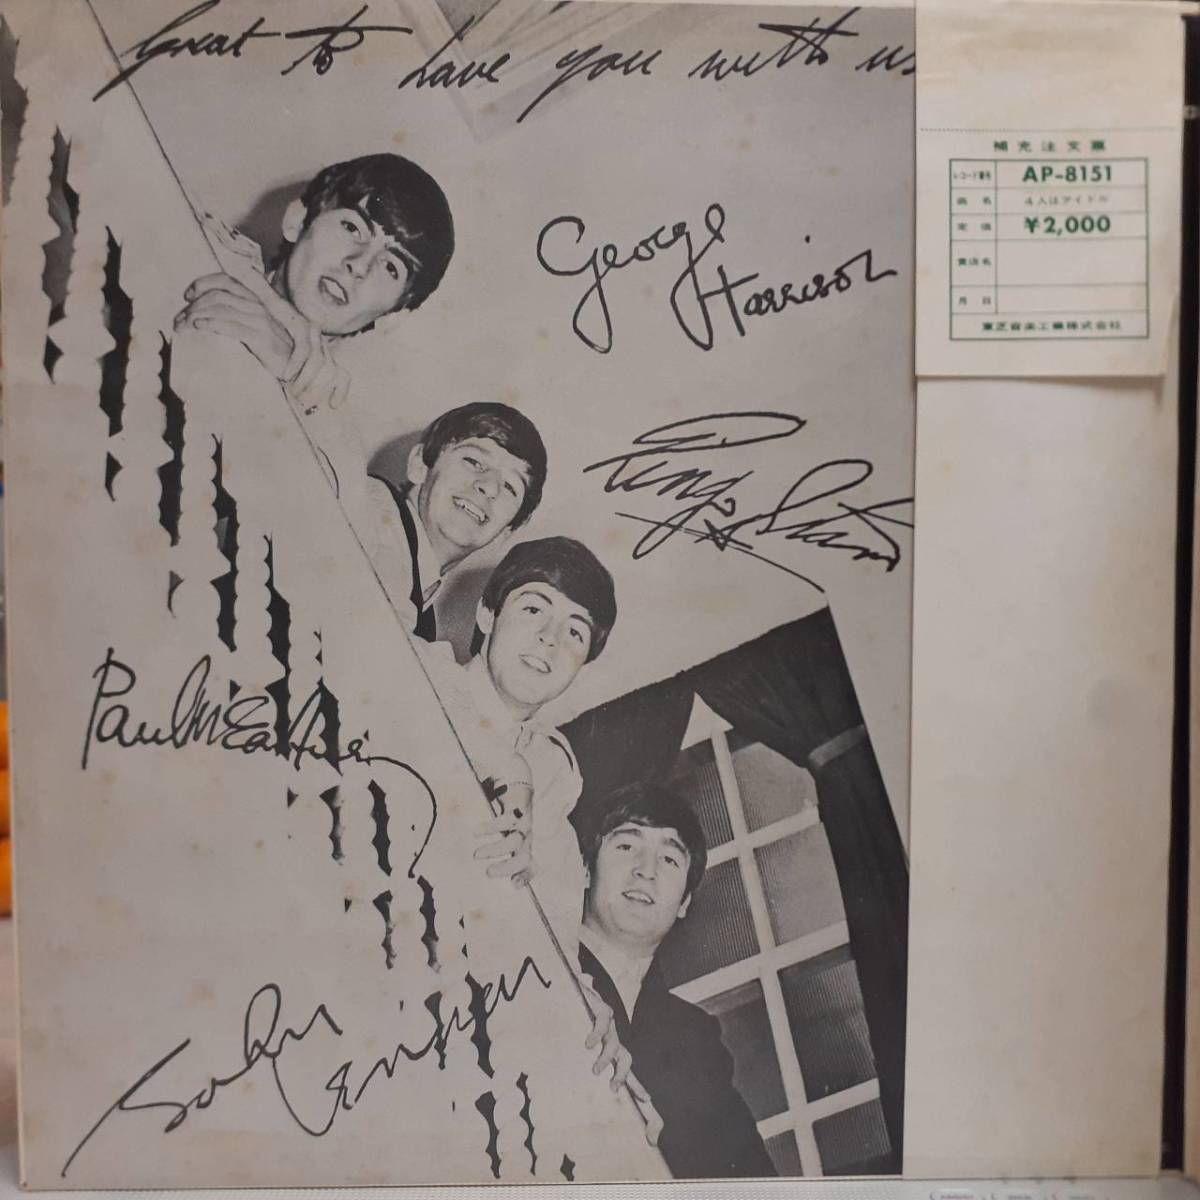  red record! Japan APPLE record LP arrow seal green obi attaching Beatles / Help! 1970 year AP-8151 Beatles 4 person is idol John Lennon Paul McCartney Ringo Starr OBI